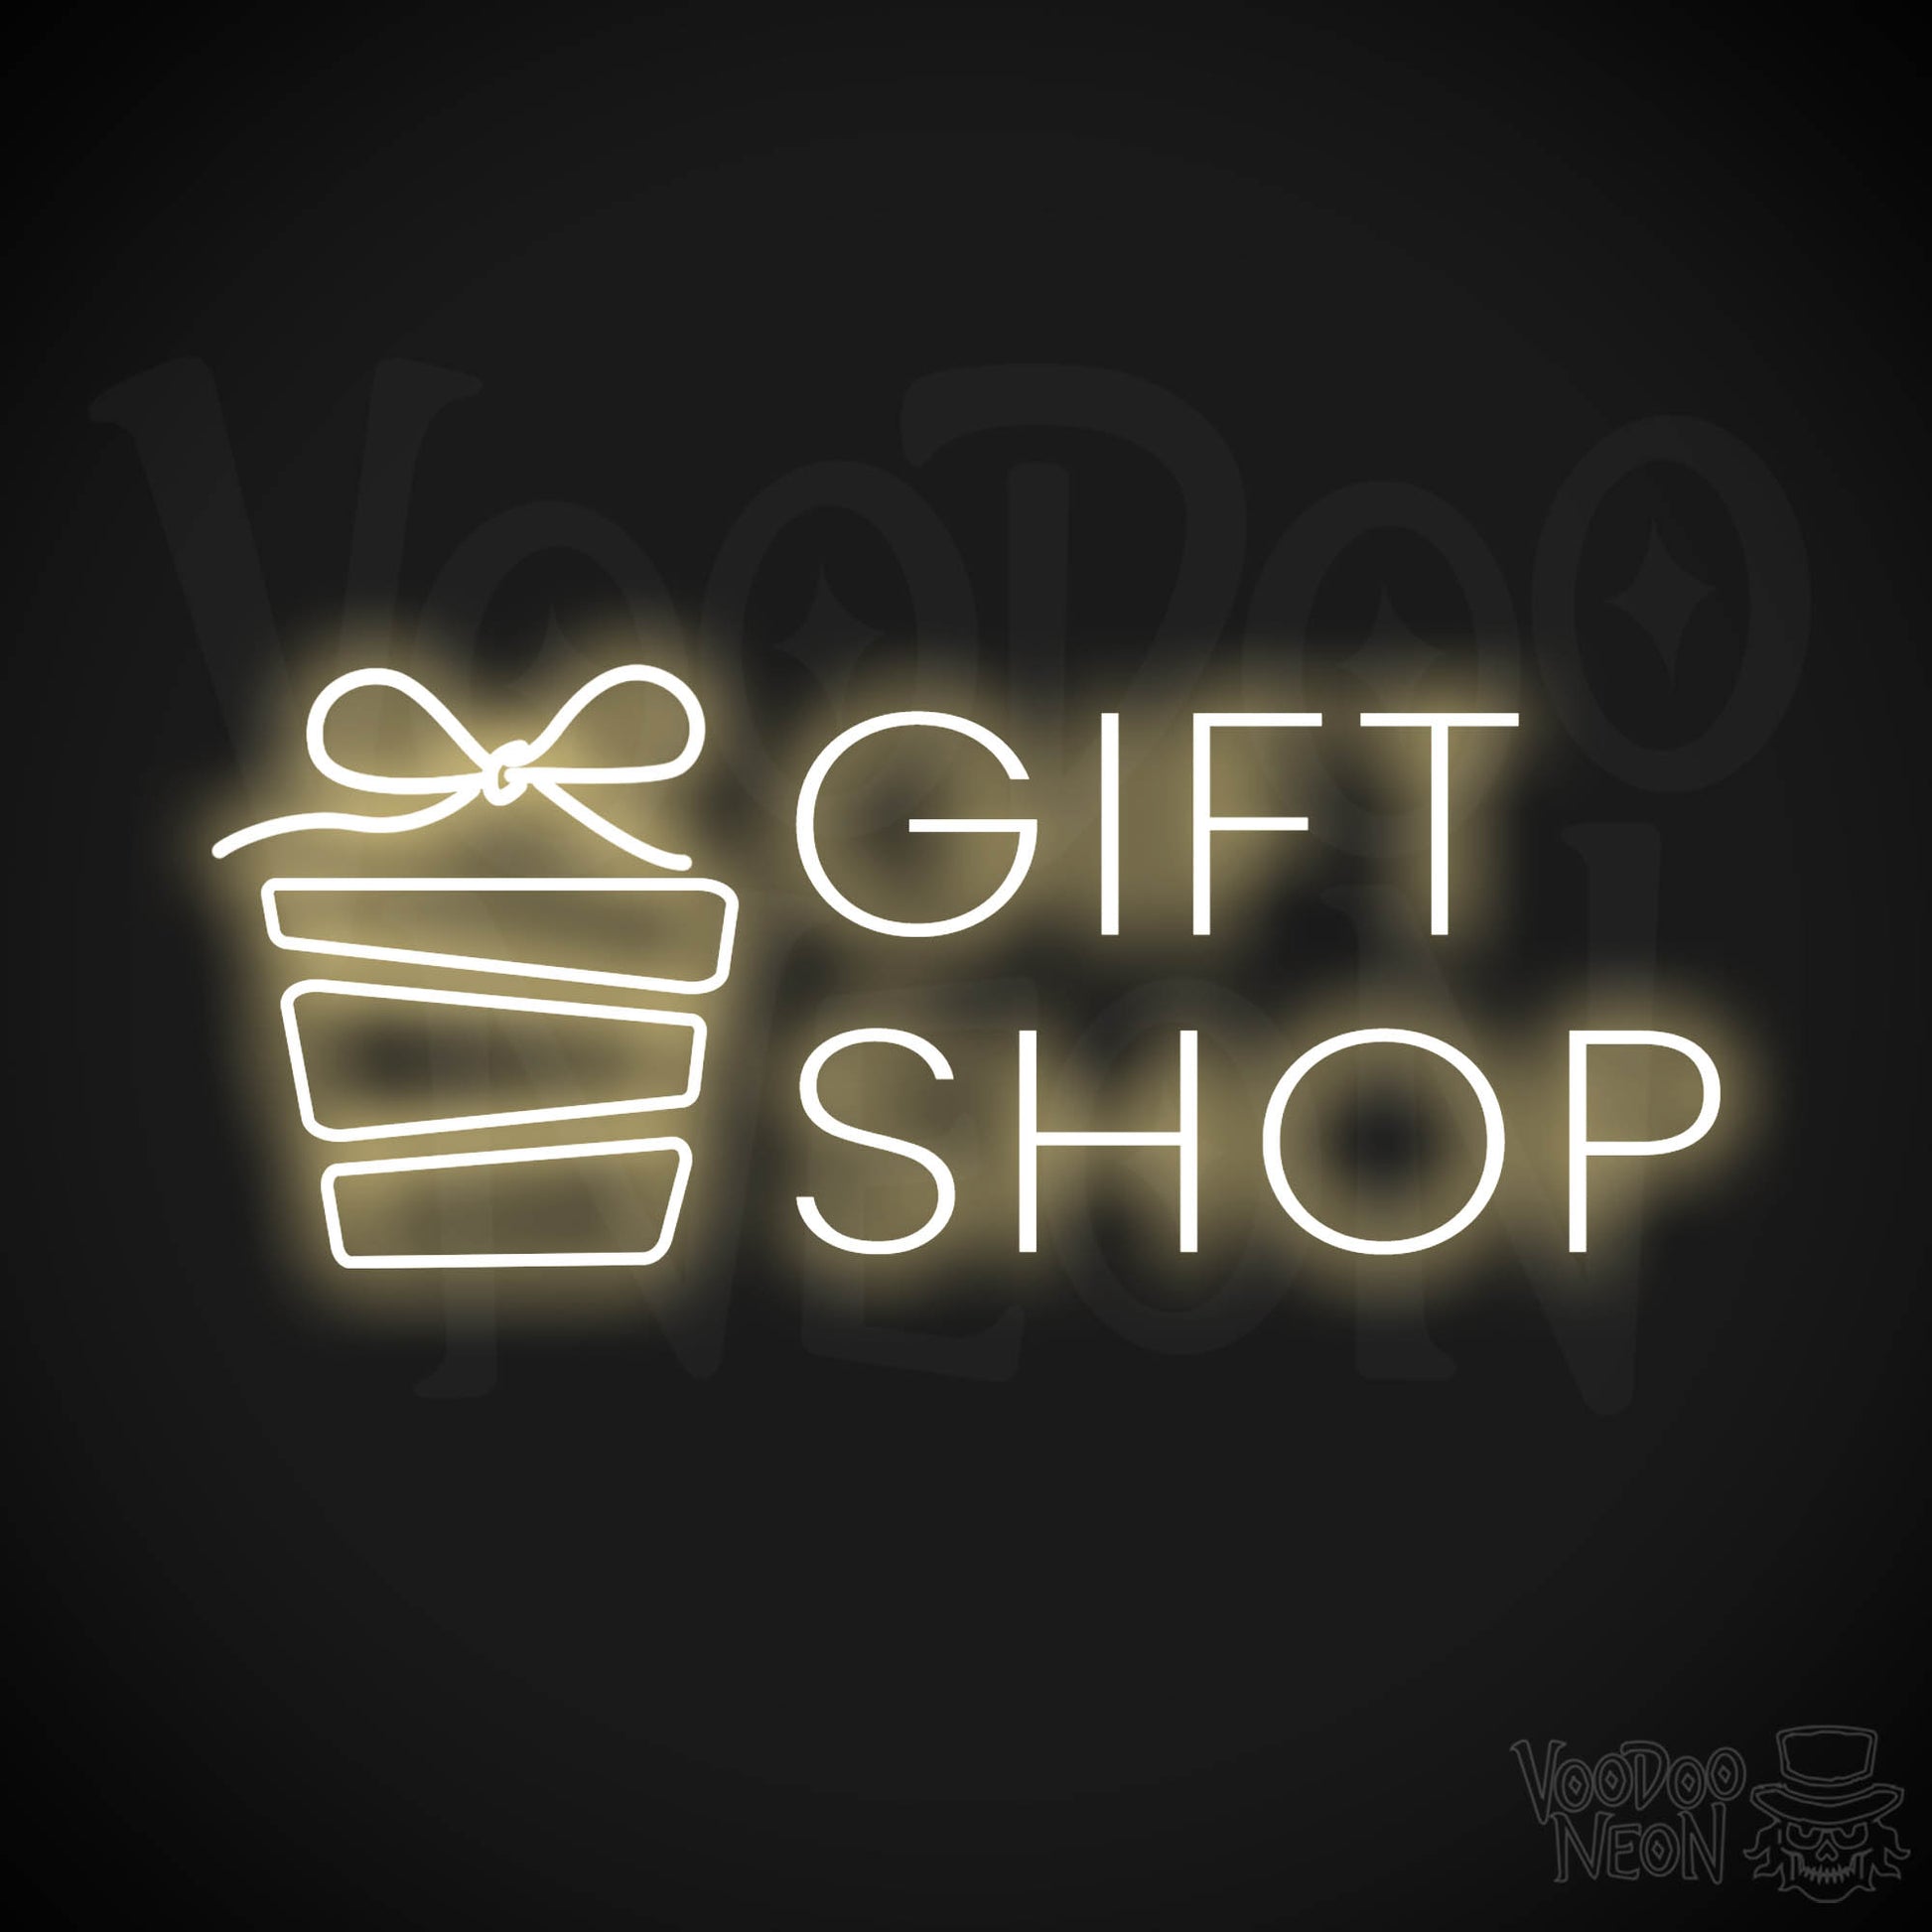 Gift Shop LED Neon - Warm White